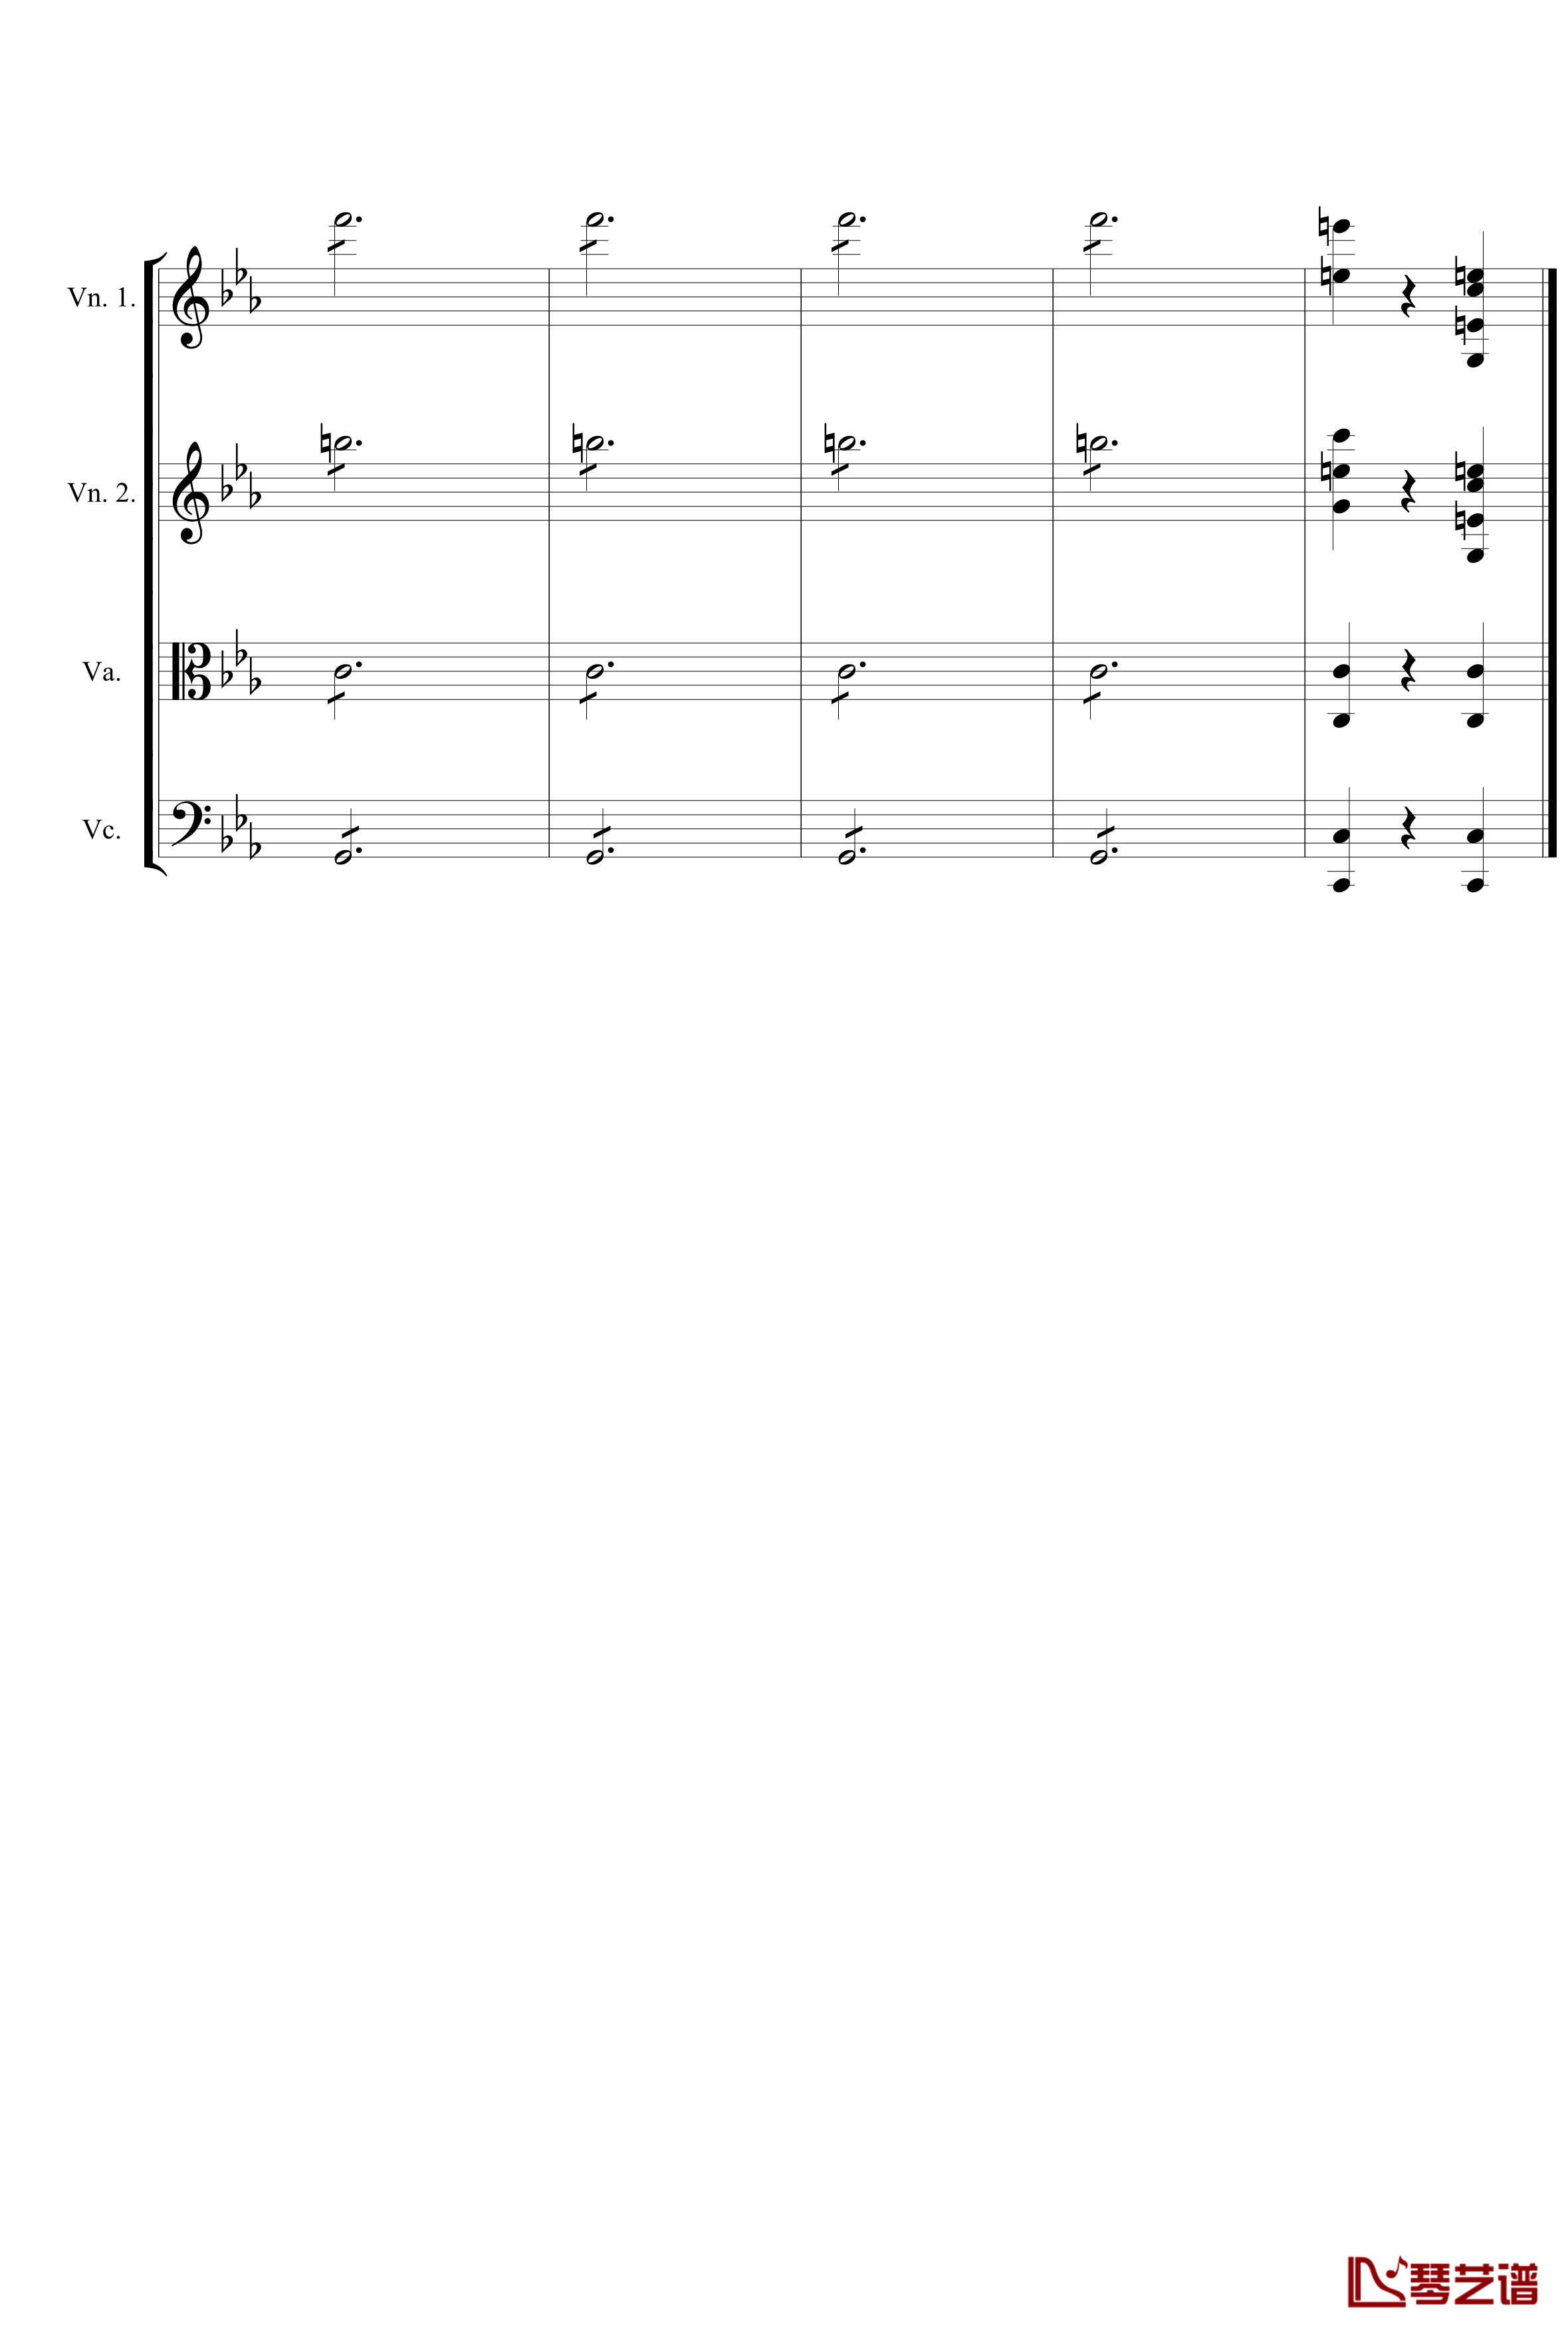 Symphony No.5 in C Minor 3rd钢琴谱-String quartet-贝多芬-beethoven24